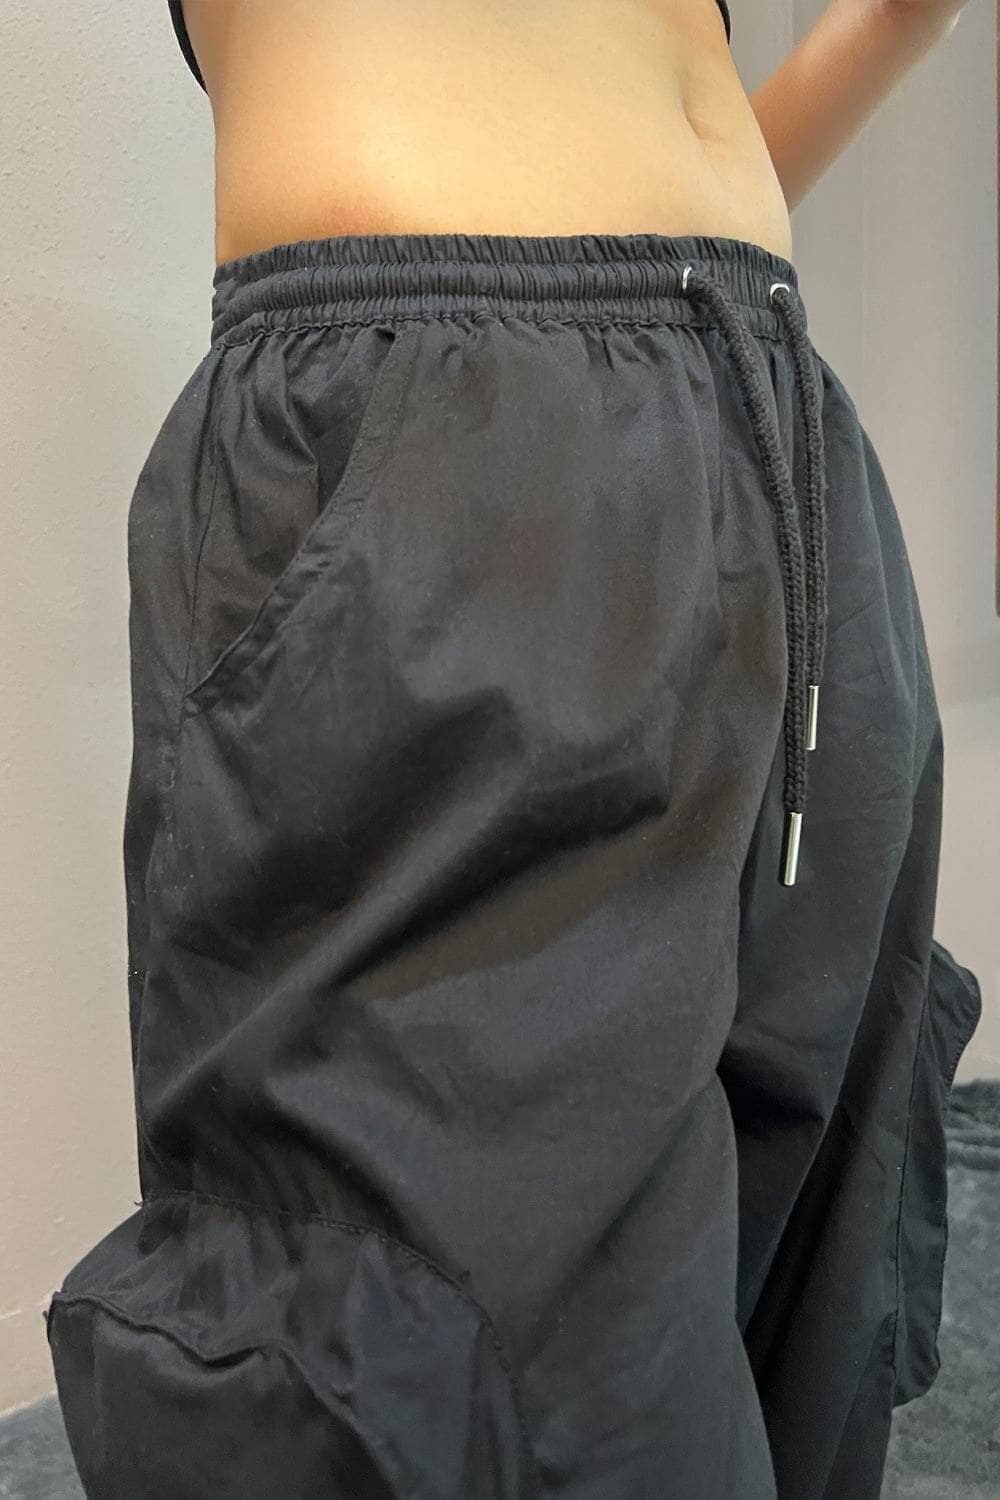 Women's Grey Tactical Parachute Pants